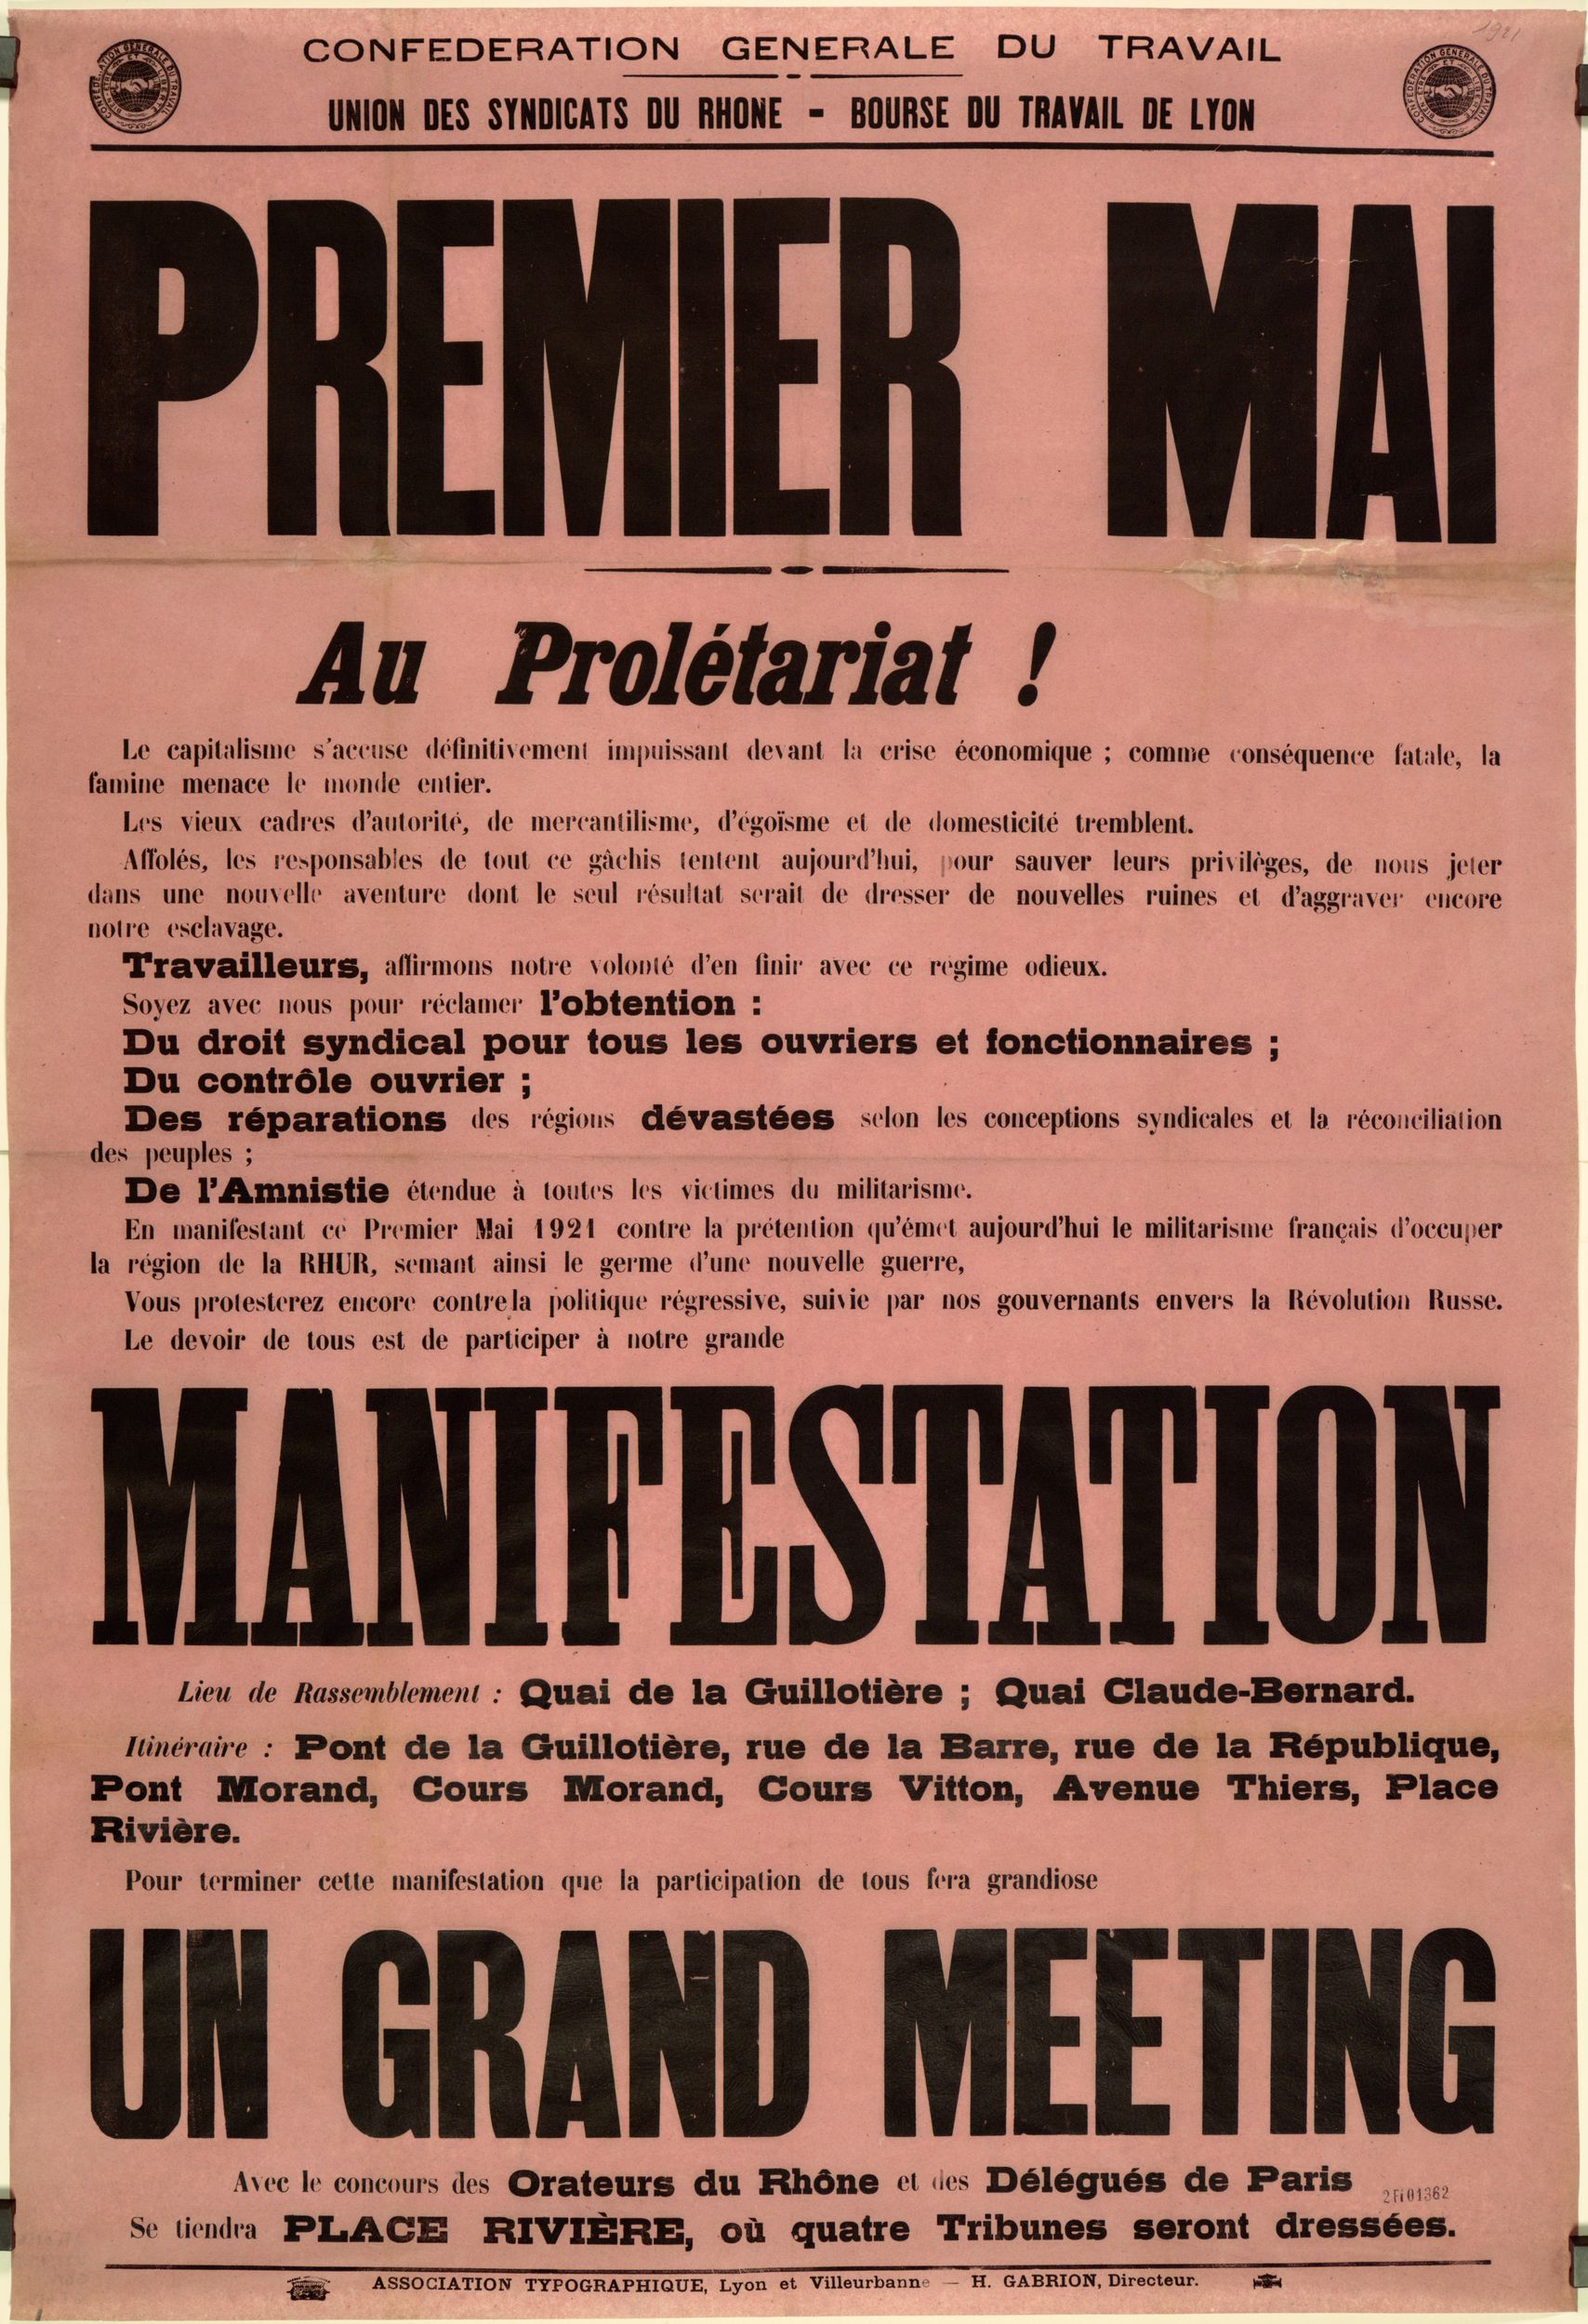 CGT - Premier mai, Au prolétariat !, manifestation, grand meeting : affiche syndicale (01/05/1921, cote : 2FI/1362)